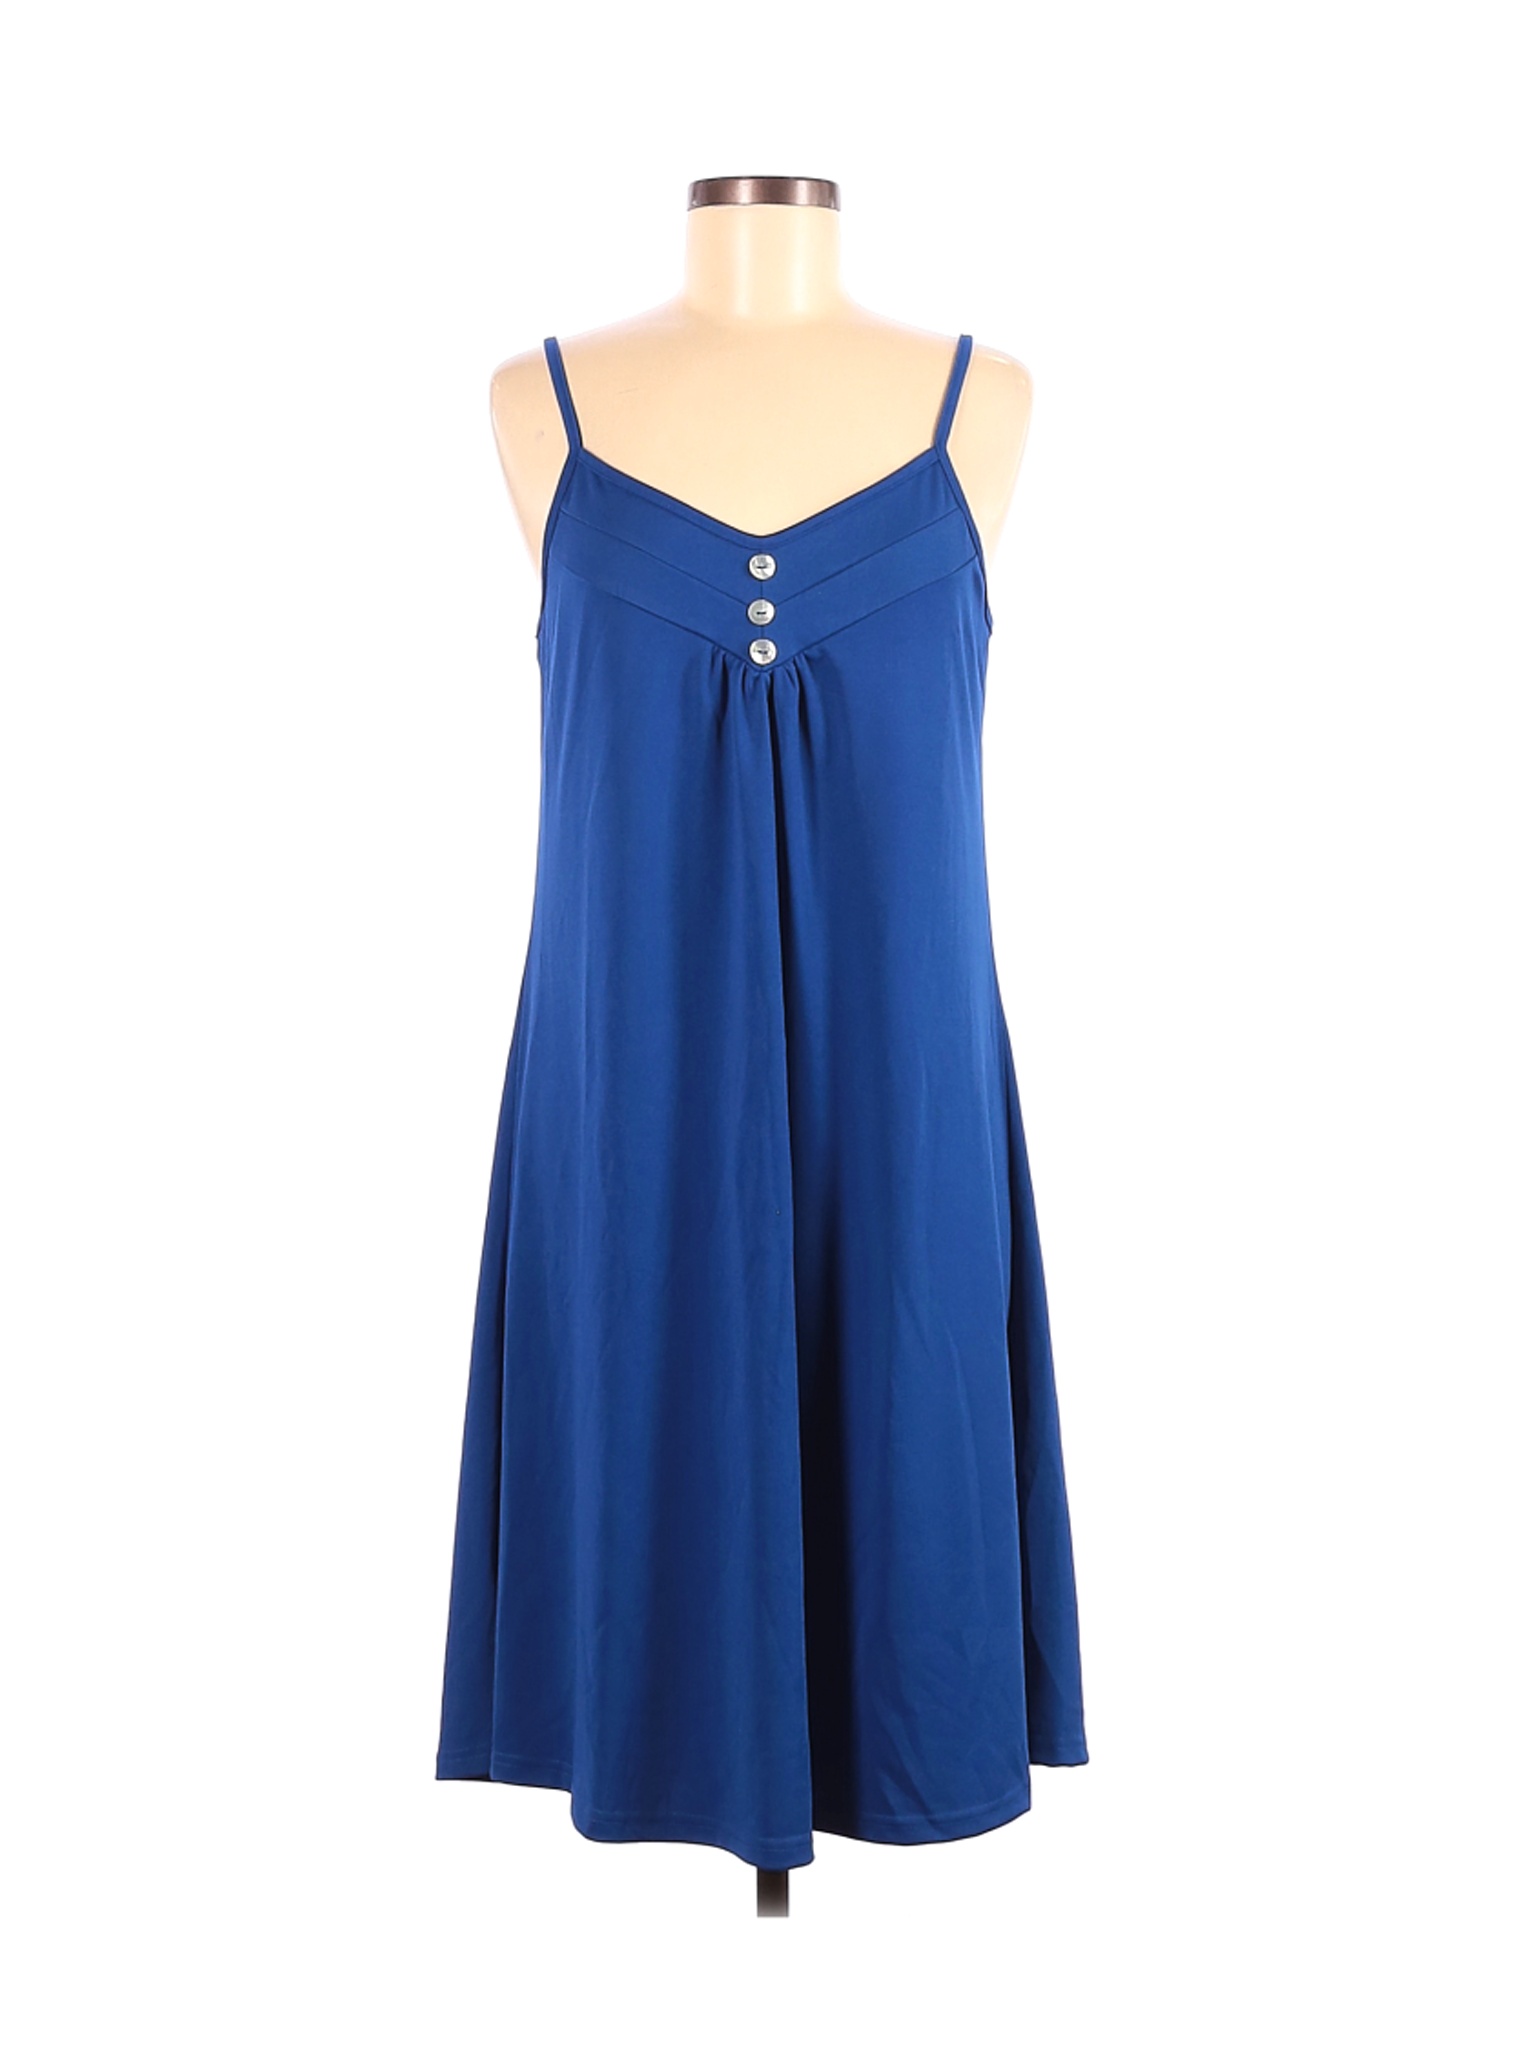 Misslook Women Blue Cocktail Dress S | eBay